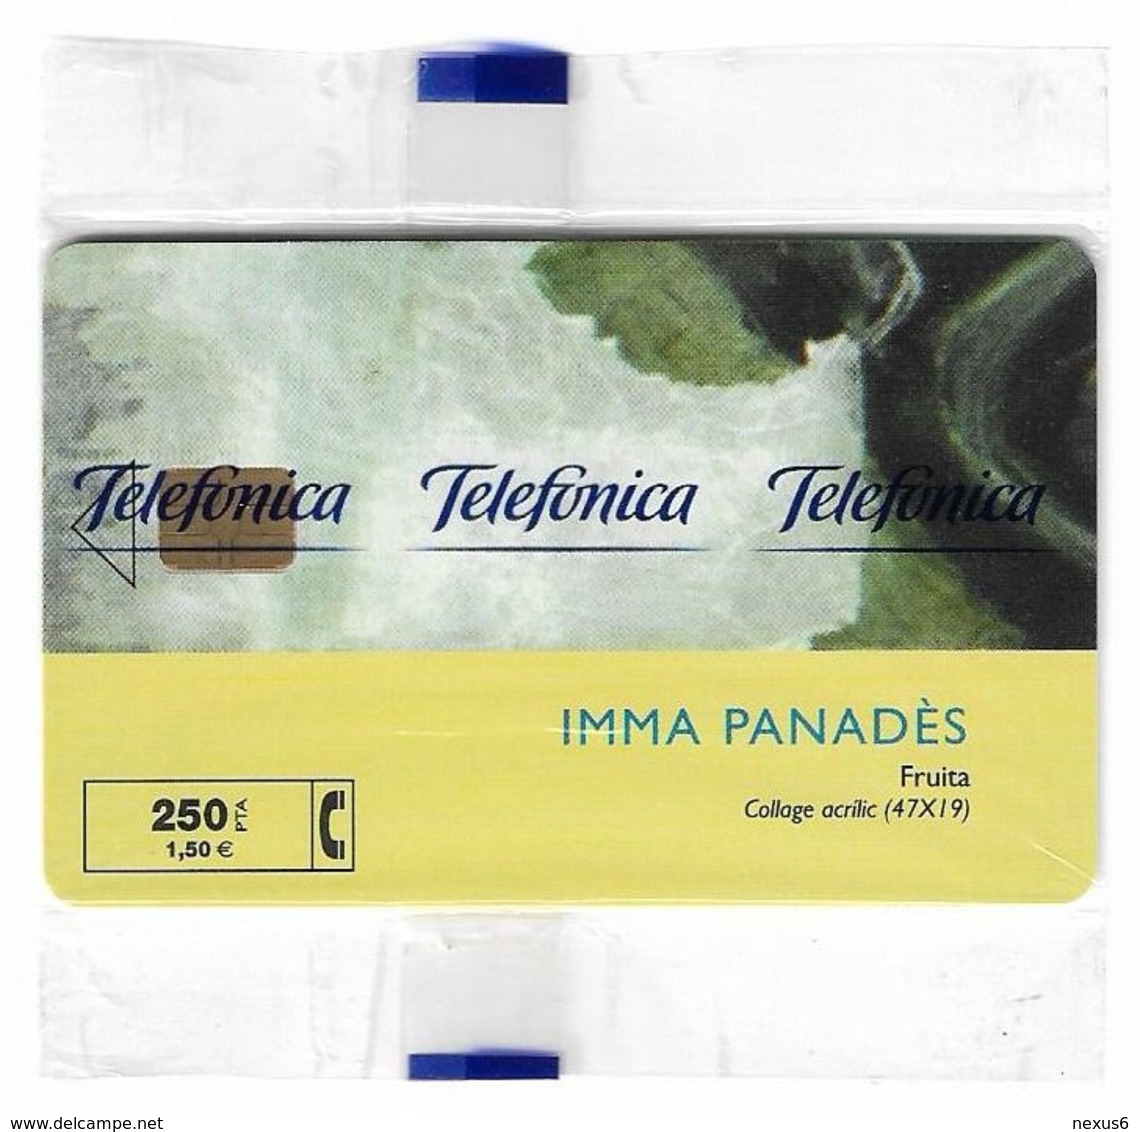 Spain - Telefonica - Coleccion Arte N.6b, Imma Panades - P-405 - 10.1999, 4.000ex, NSB - Emisiones Privadas